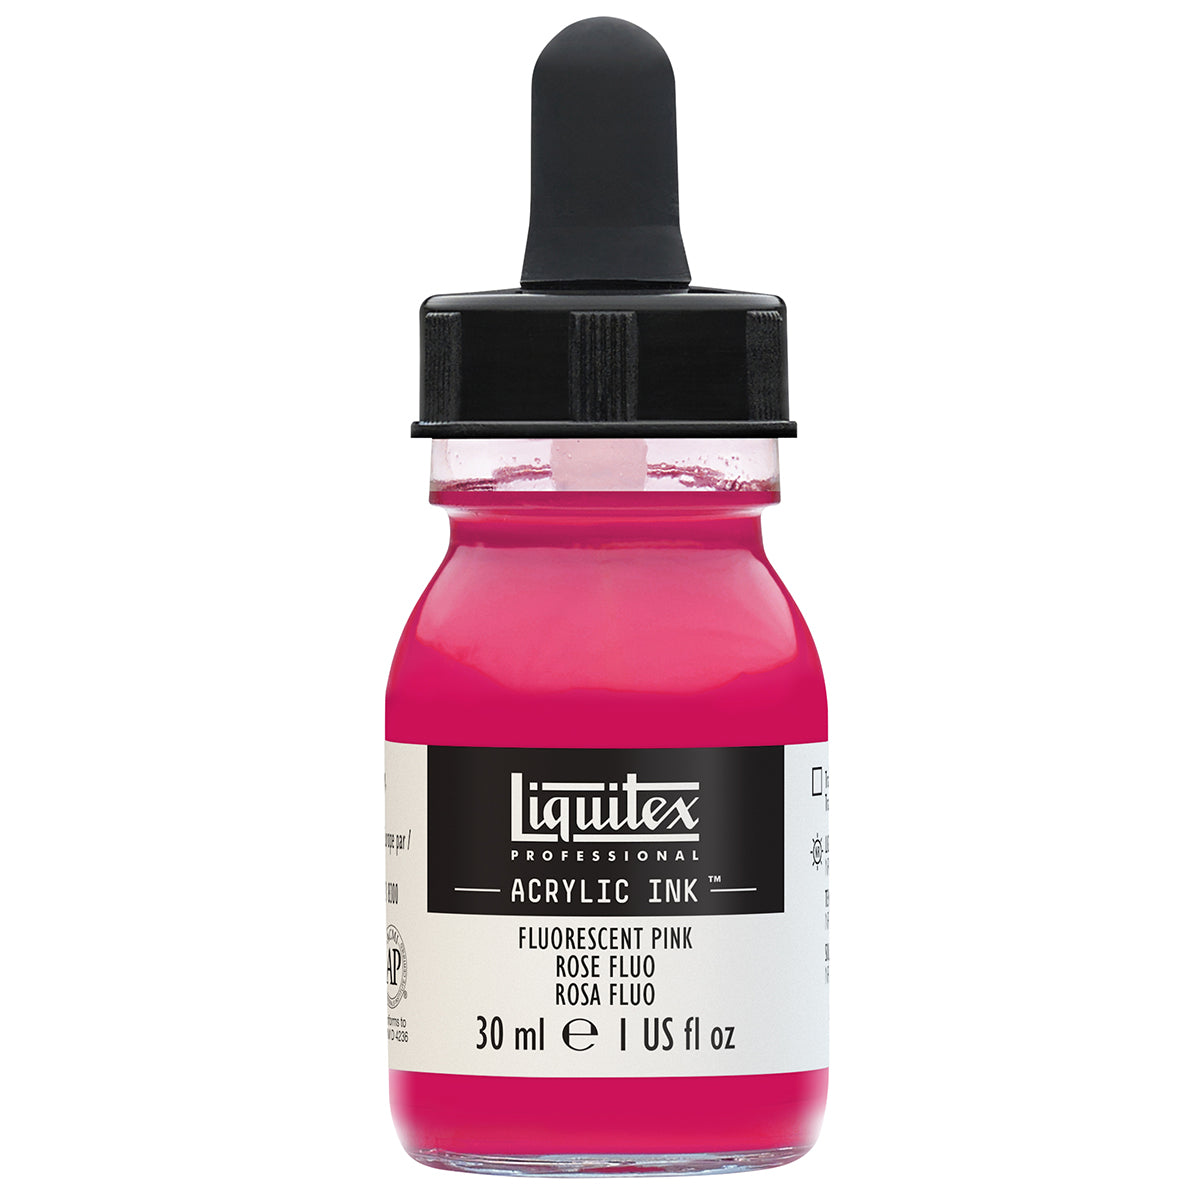 Liquitex - Acrylic Ink - 30ml Fluorescent Pink